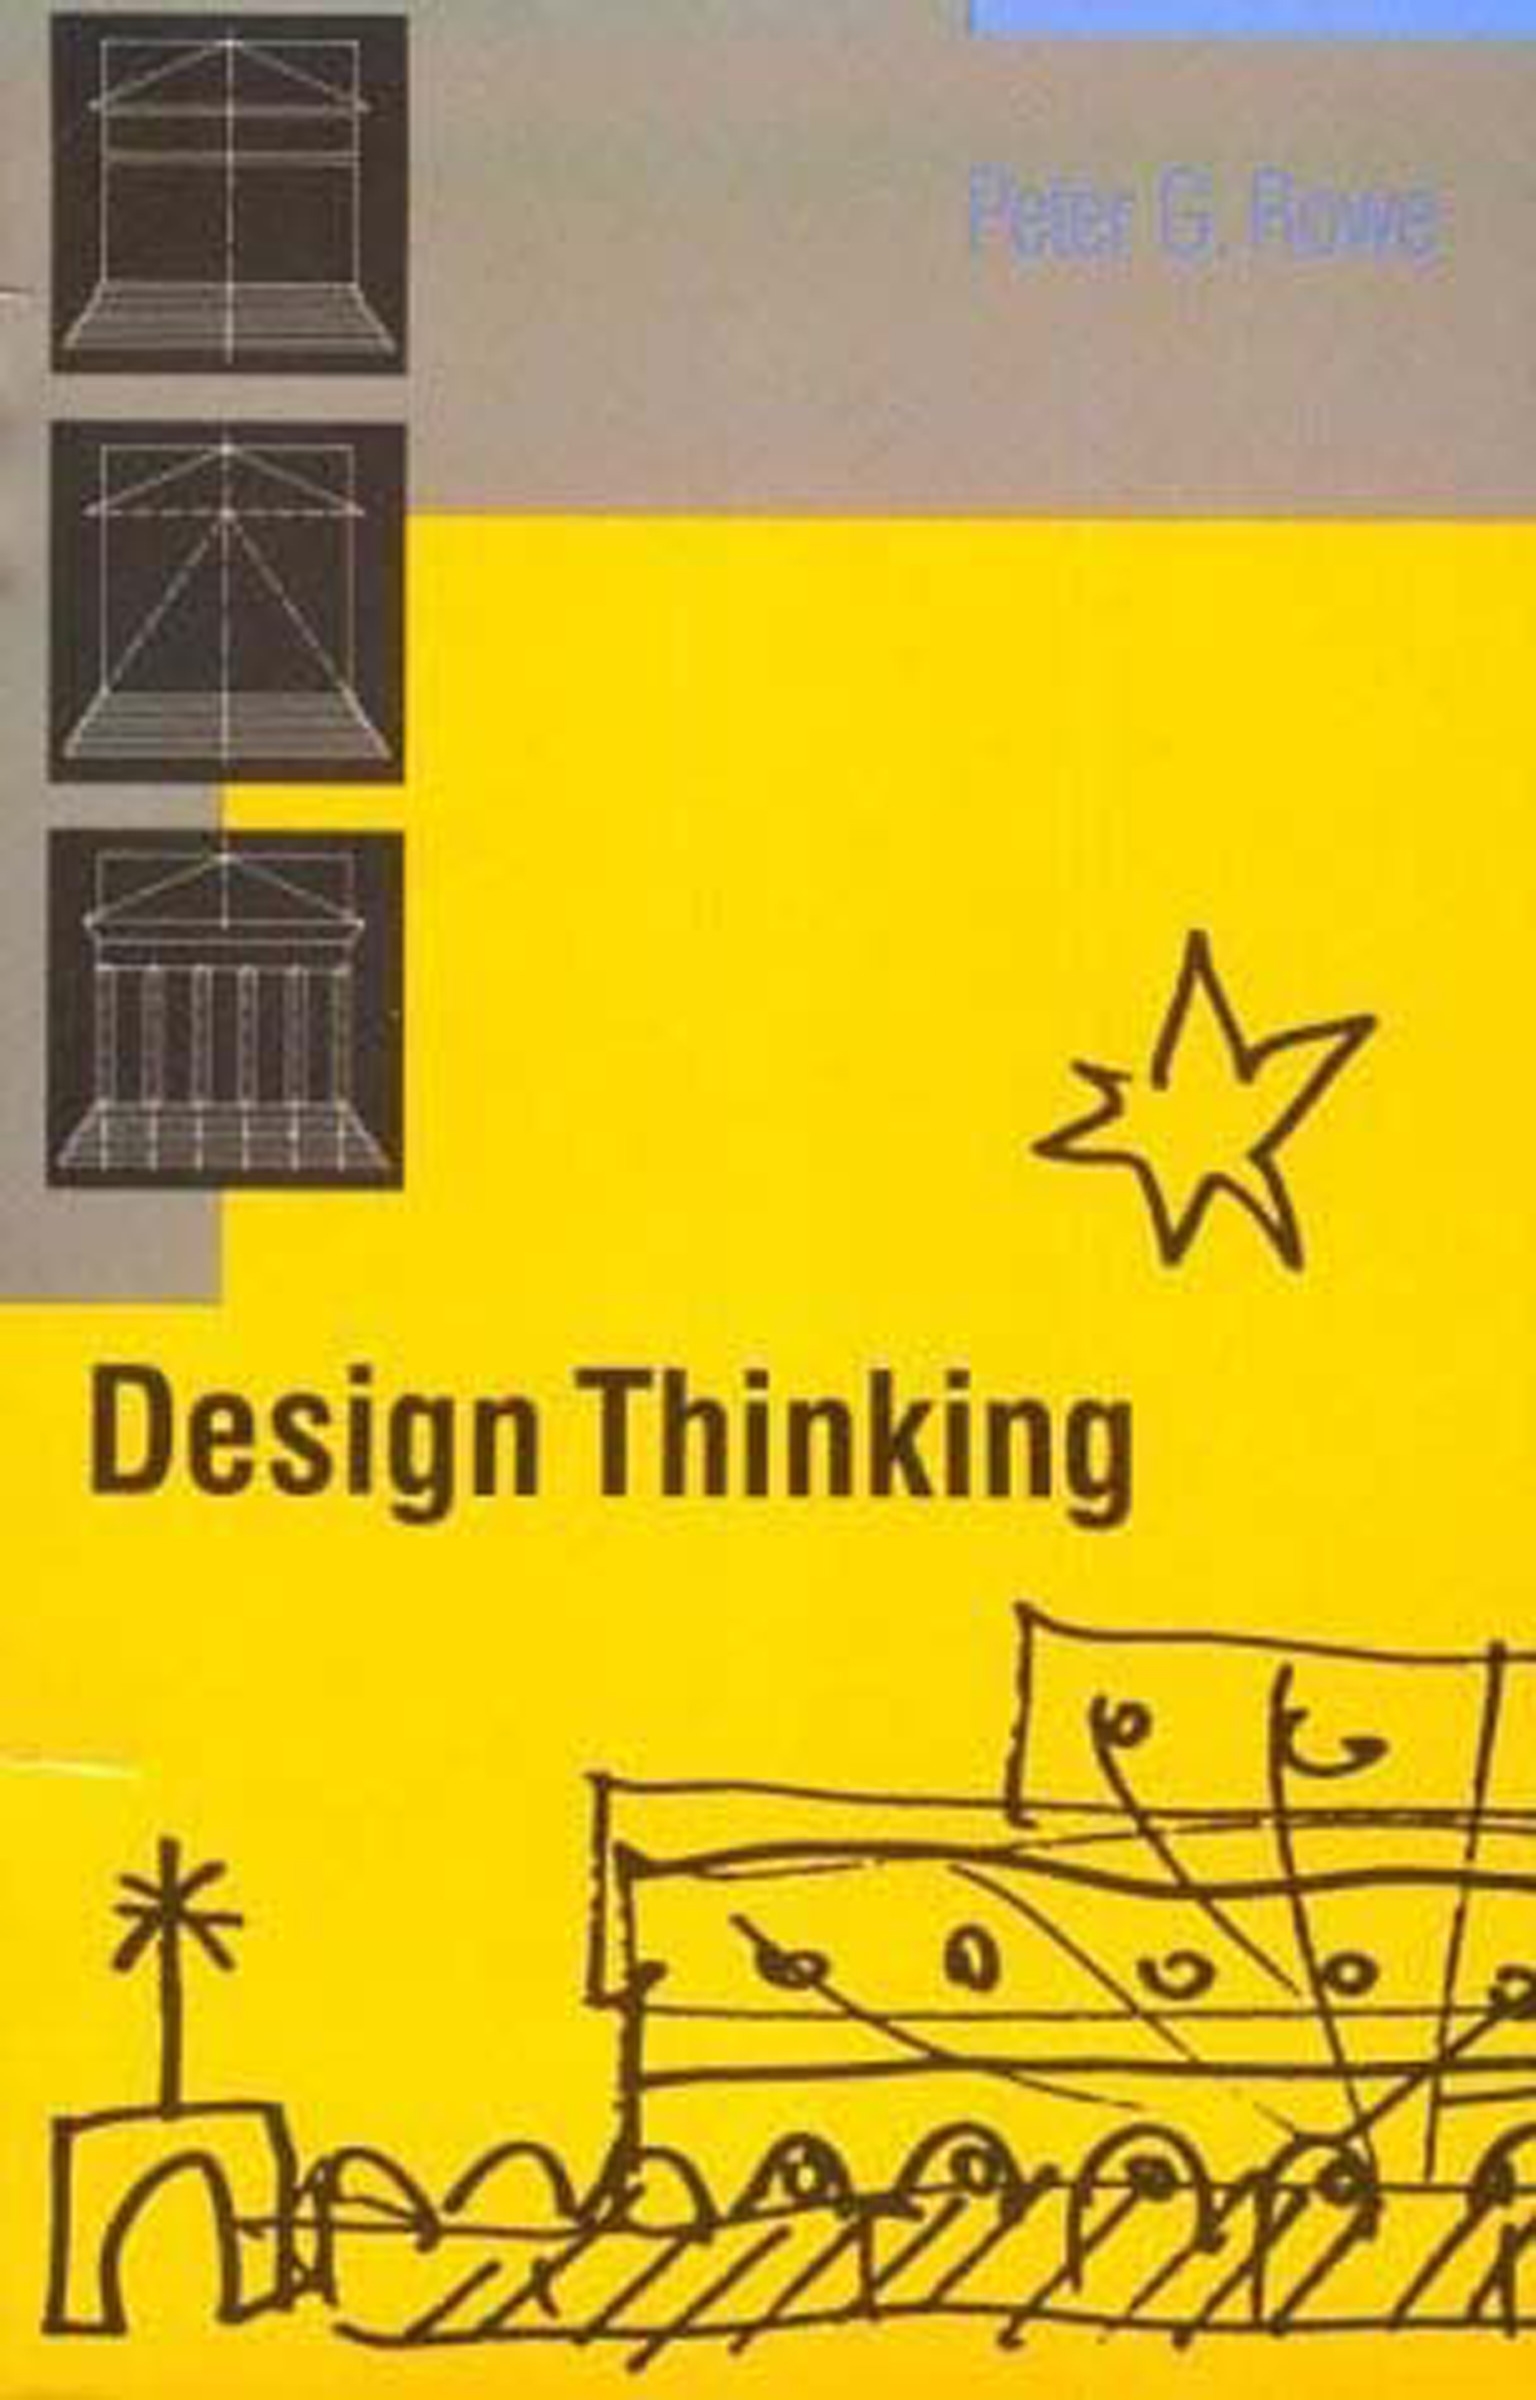 Design Thinking by Peter G. Rowe - Penguin Books Australia